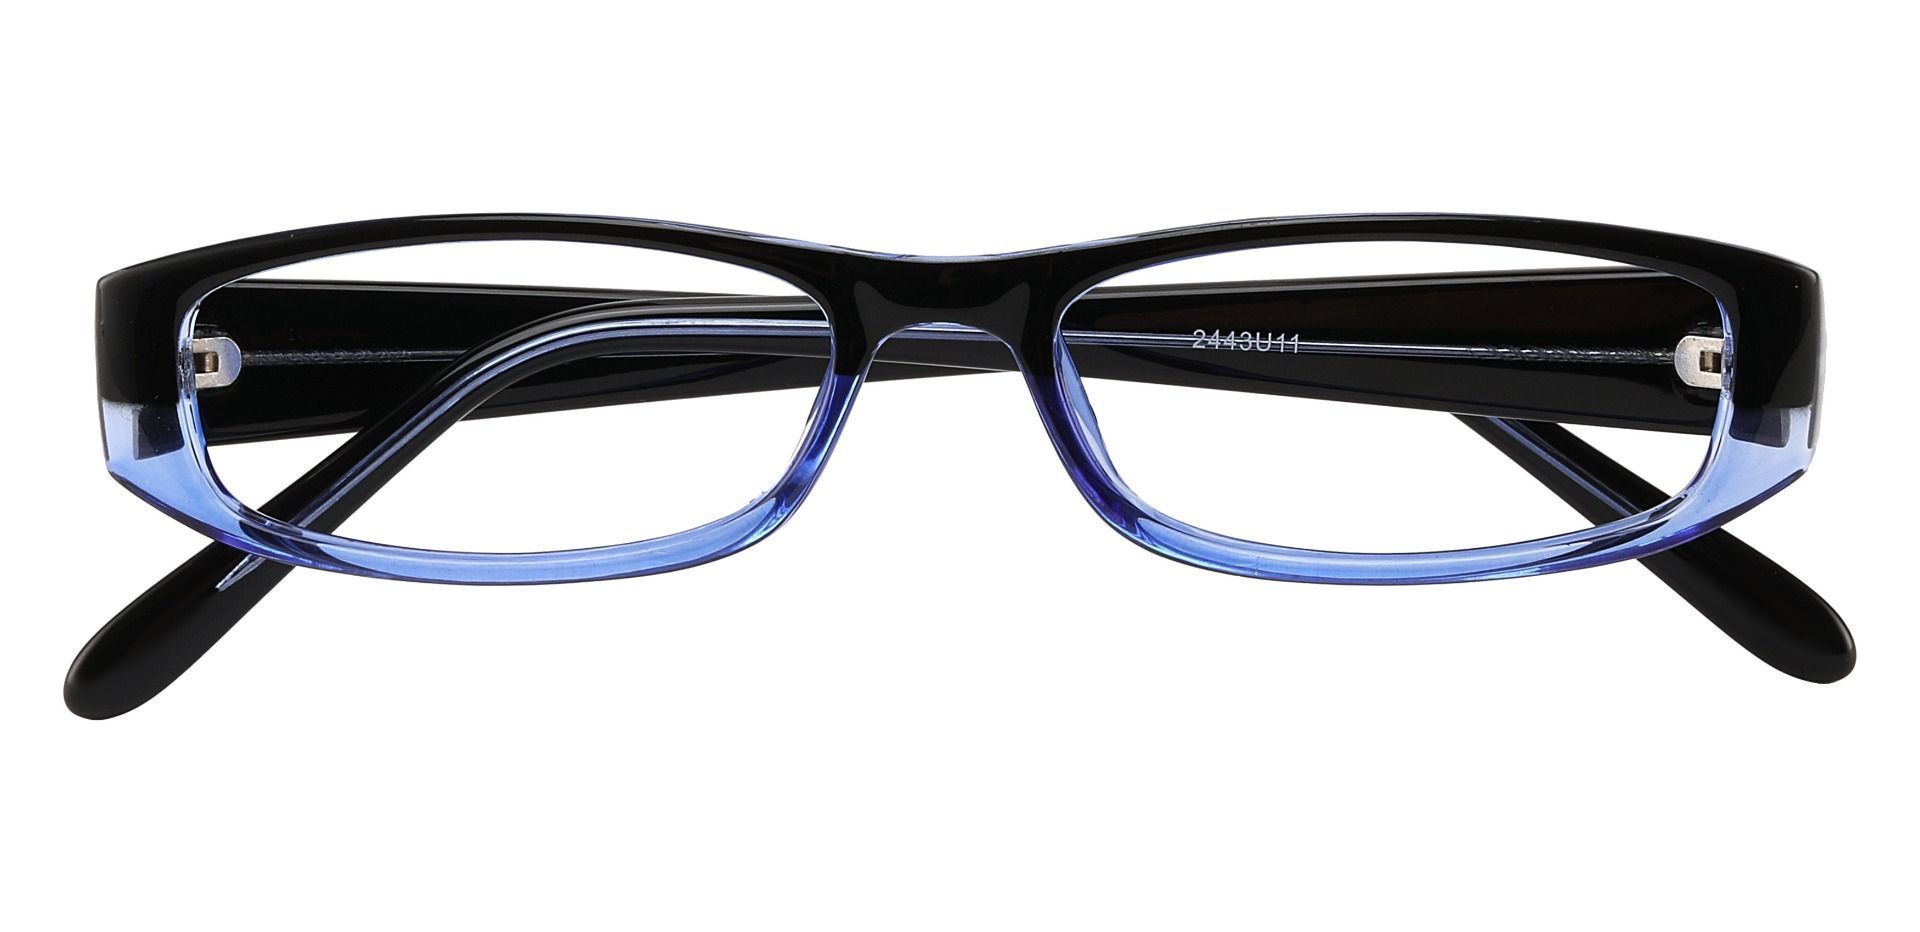 Elgin Rectangle Single Vision Glasses - Blue